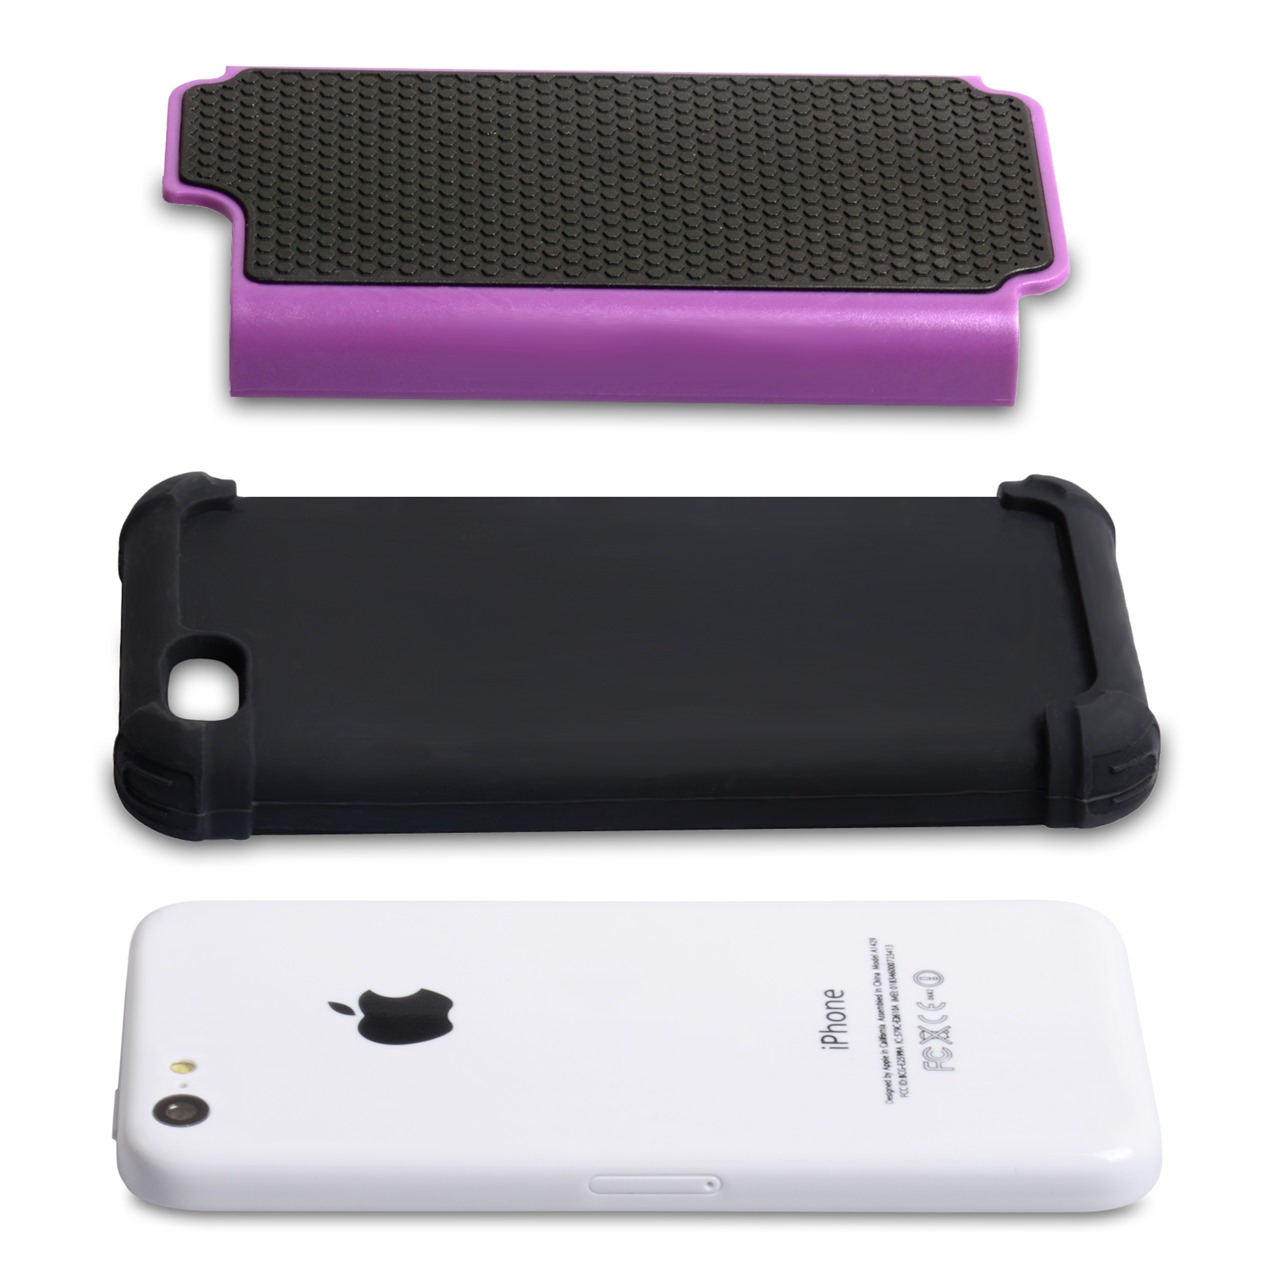 YouSave Accessories iPhone 5C Grip Combo Case - Purple